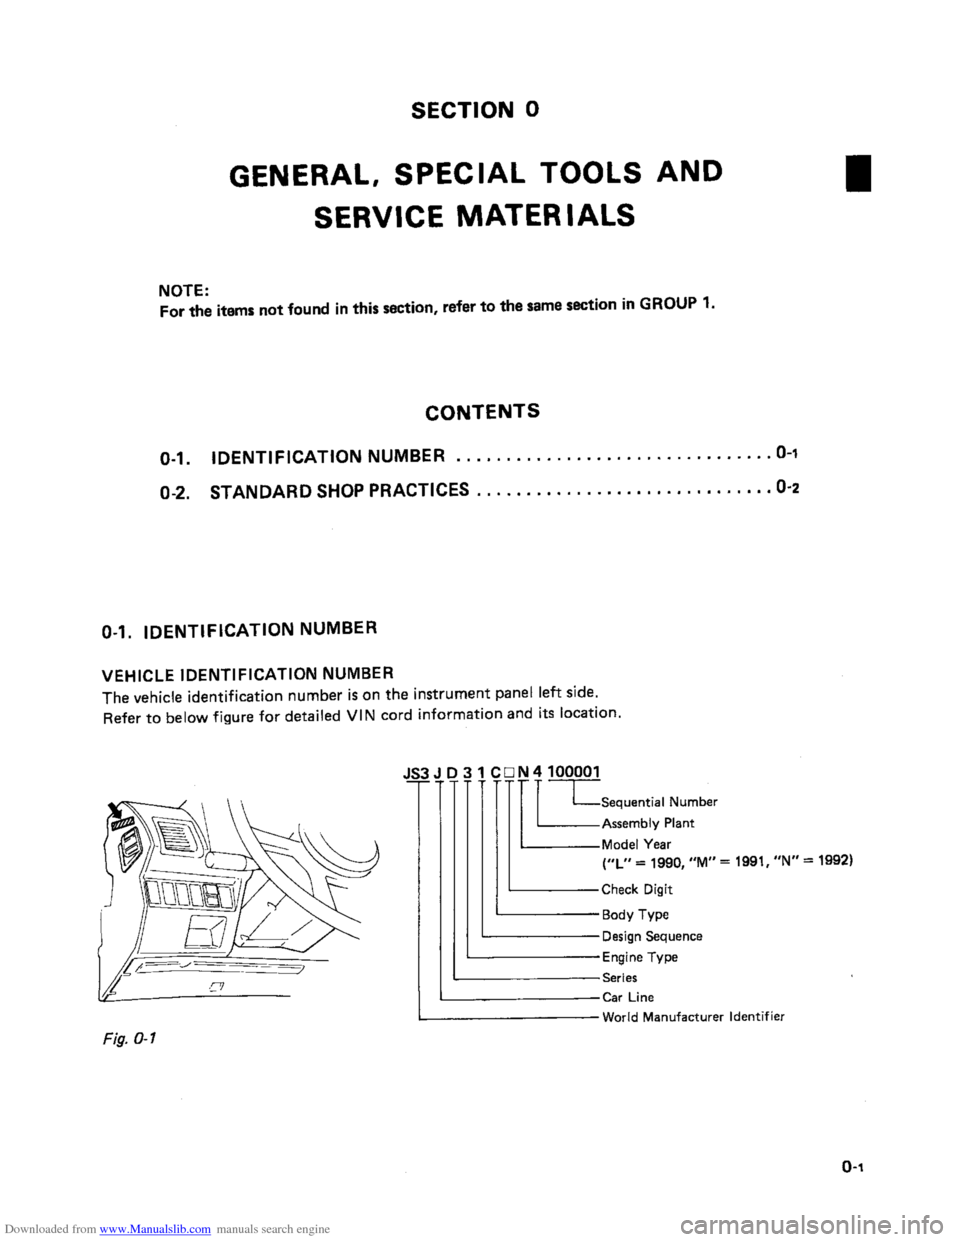 SUZUKI SAMURAI 1991 2.G 2WD Supplementary Service Workshop Manual Downloaded from www.Manualslib.com manuals search engine    